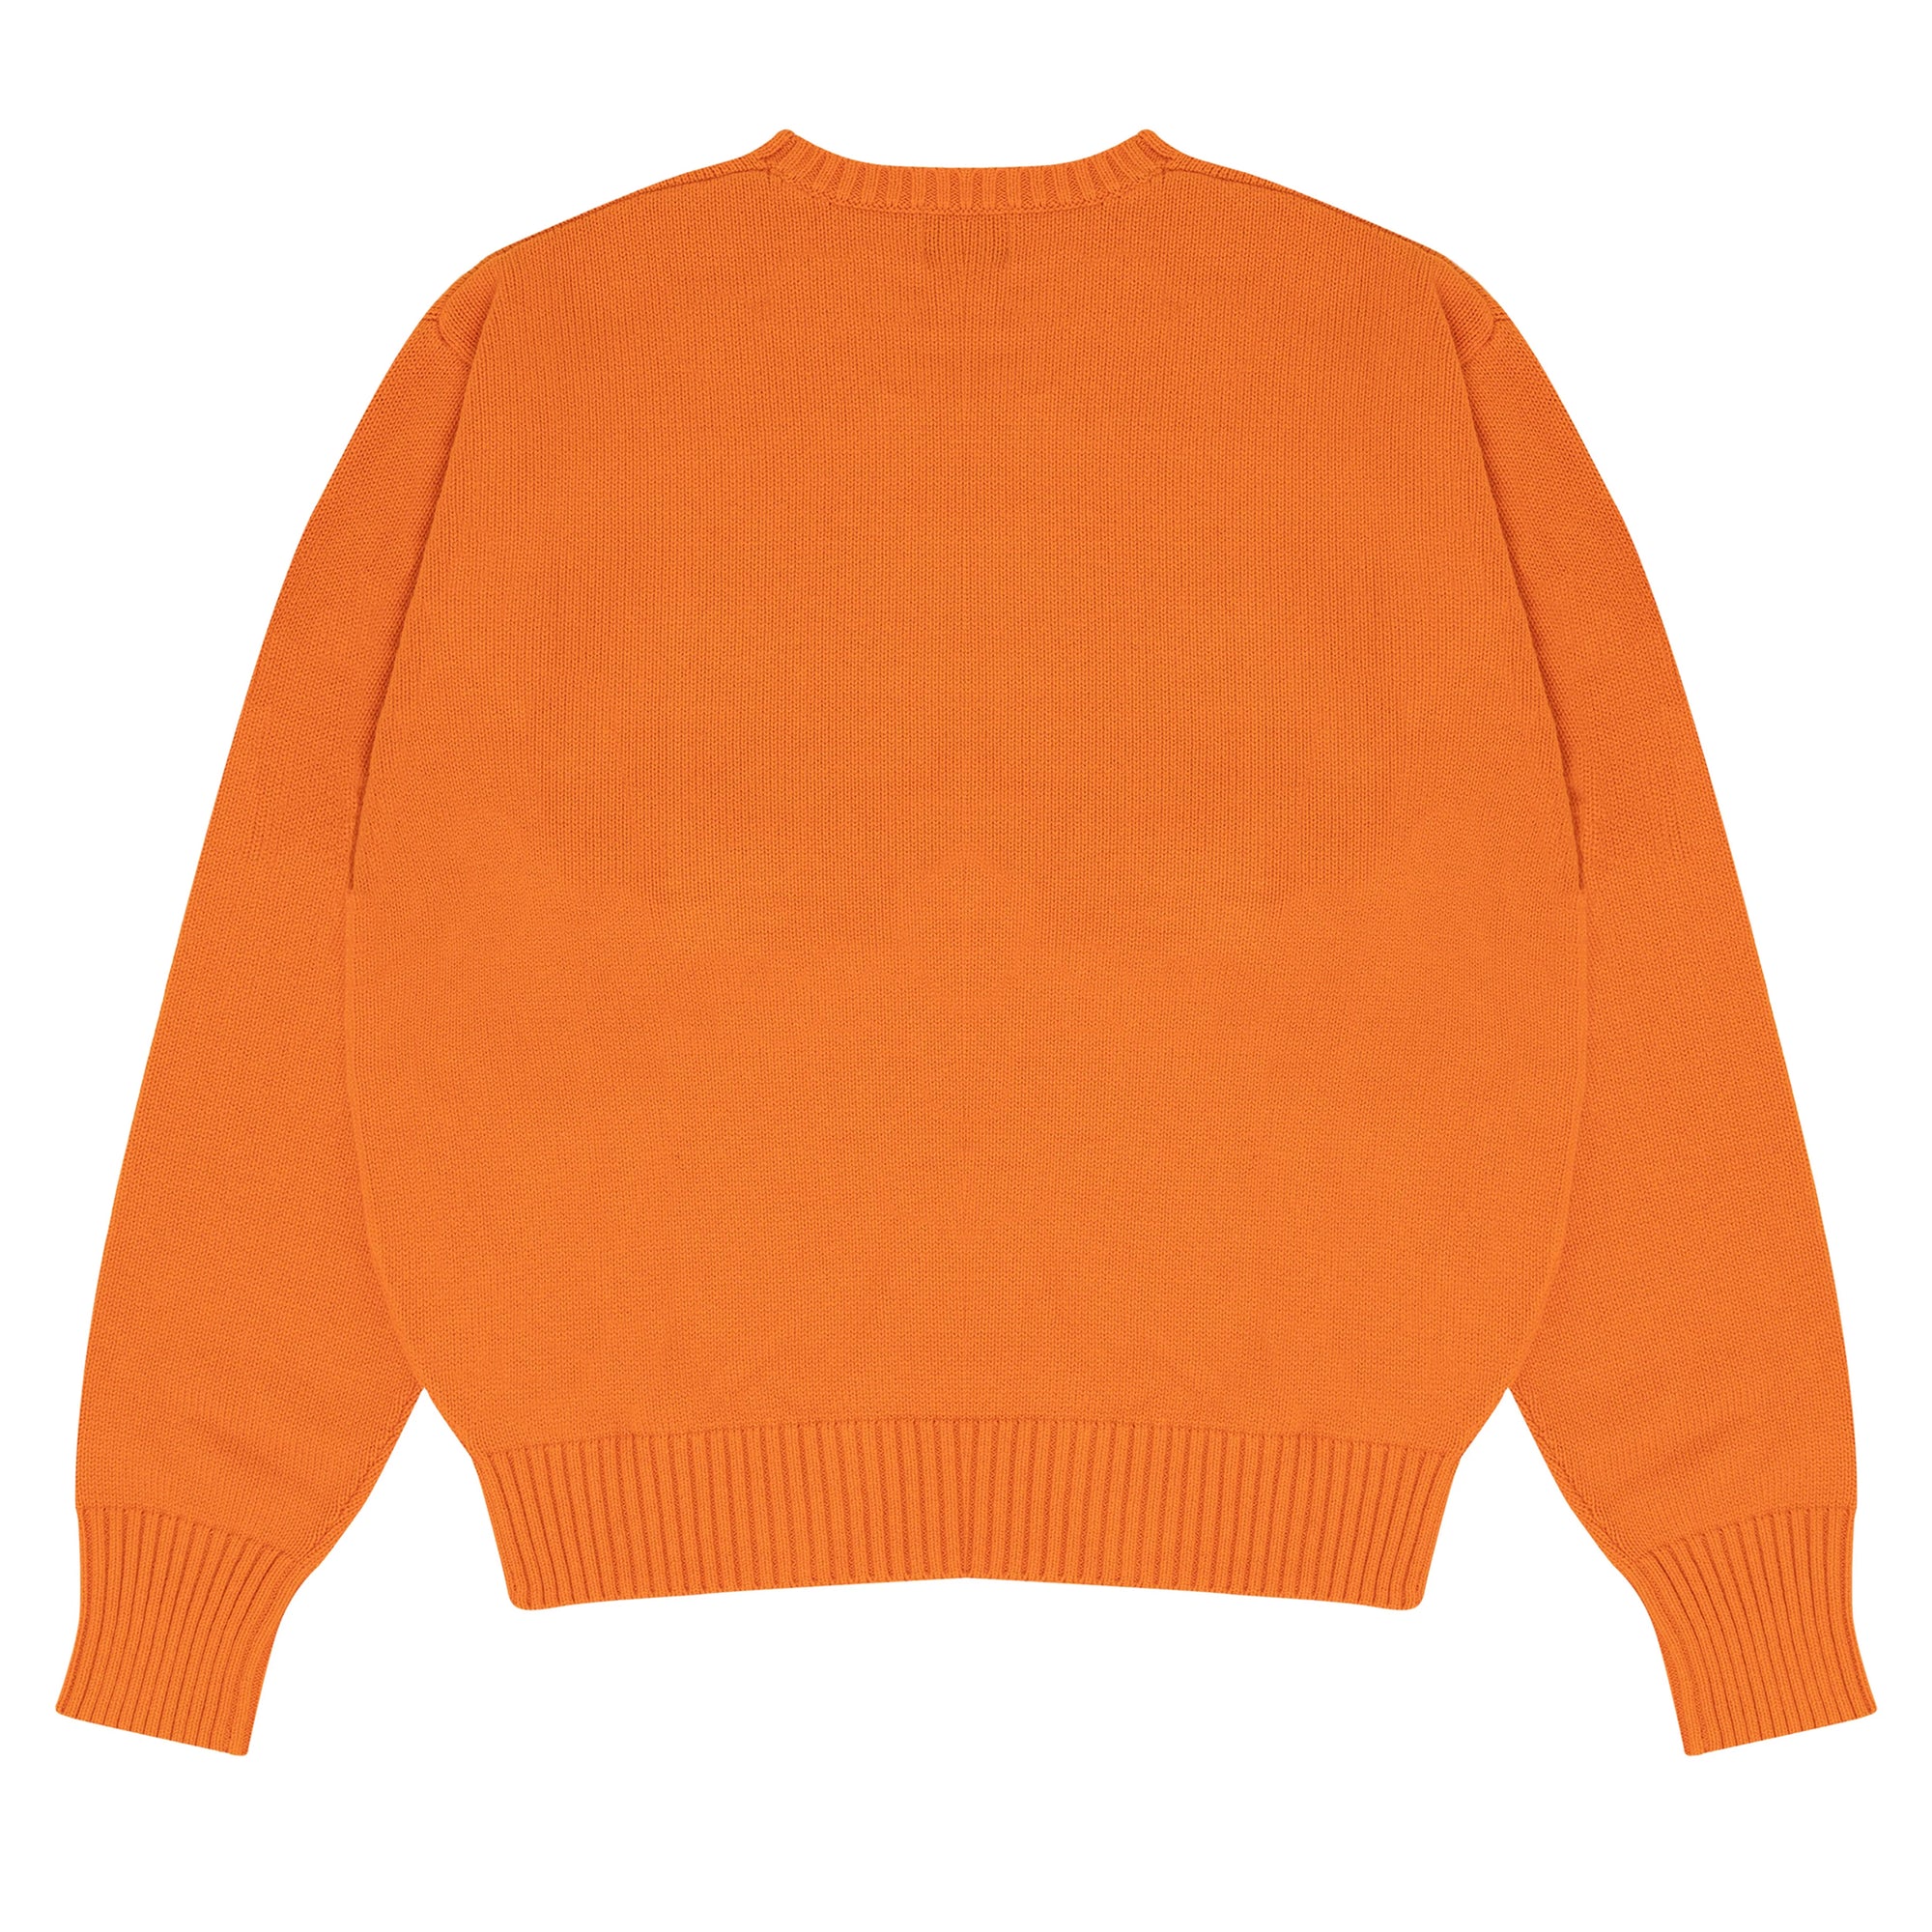 DENIM TEARS - Tyson Beckford Sweater - (Orange) view 2